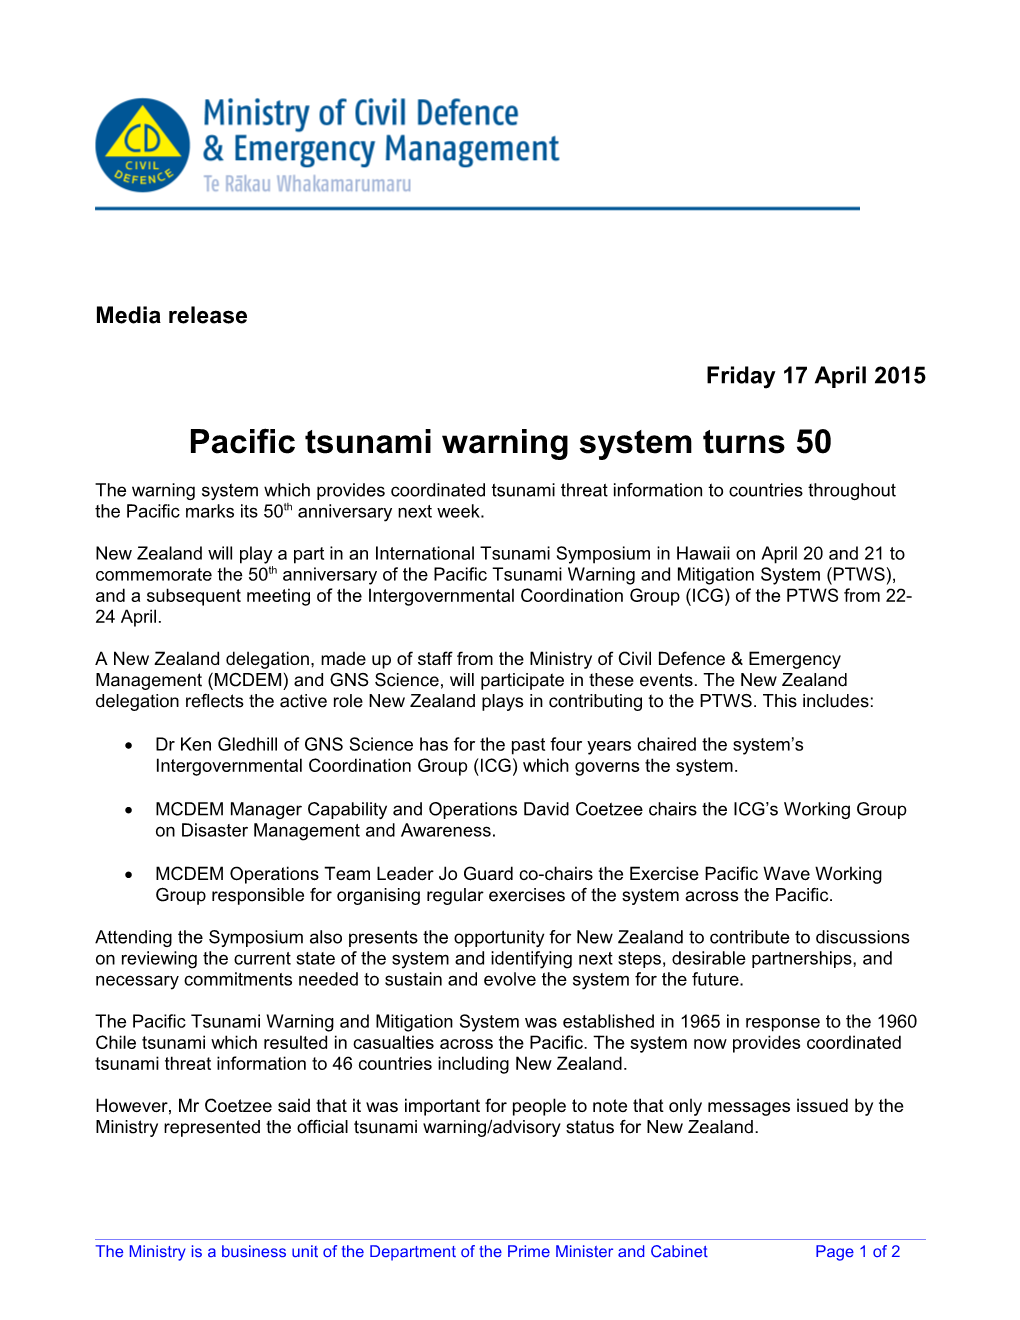 Pacific Tsunami Warning System Turns 50